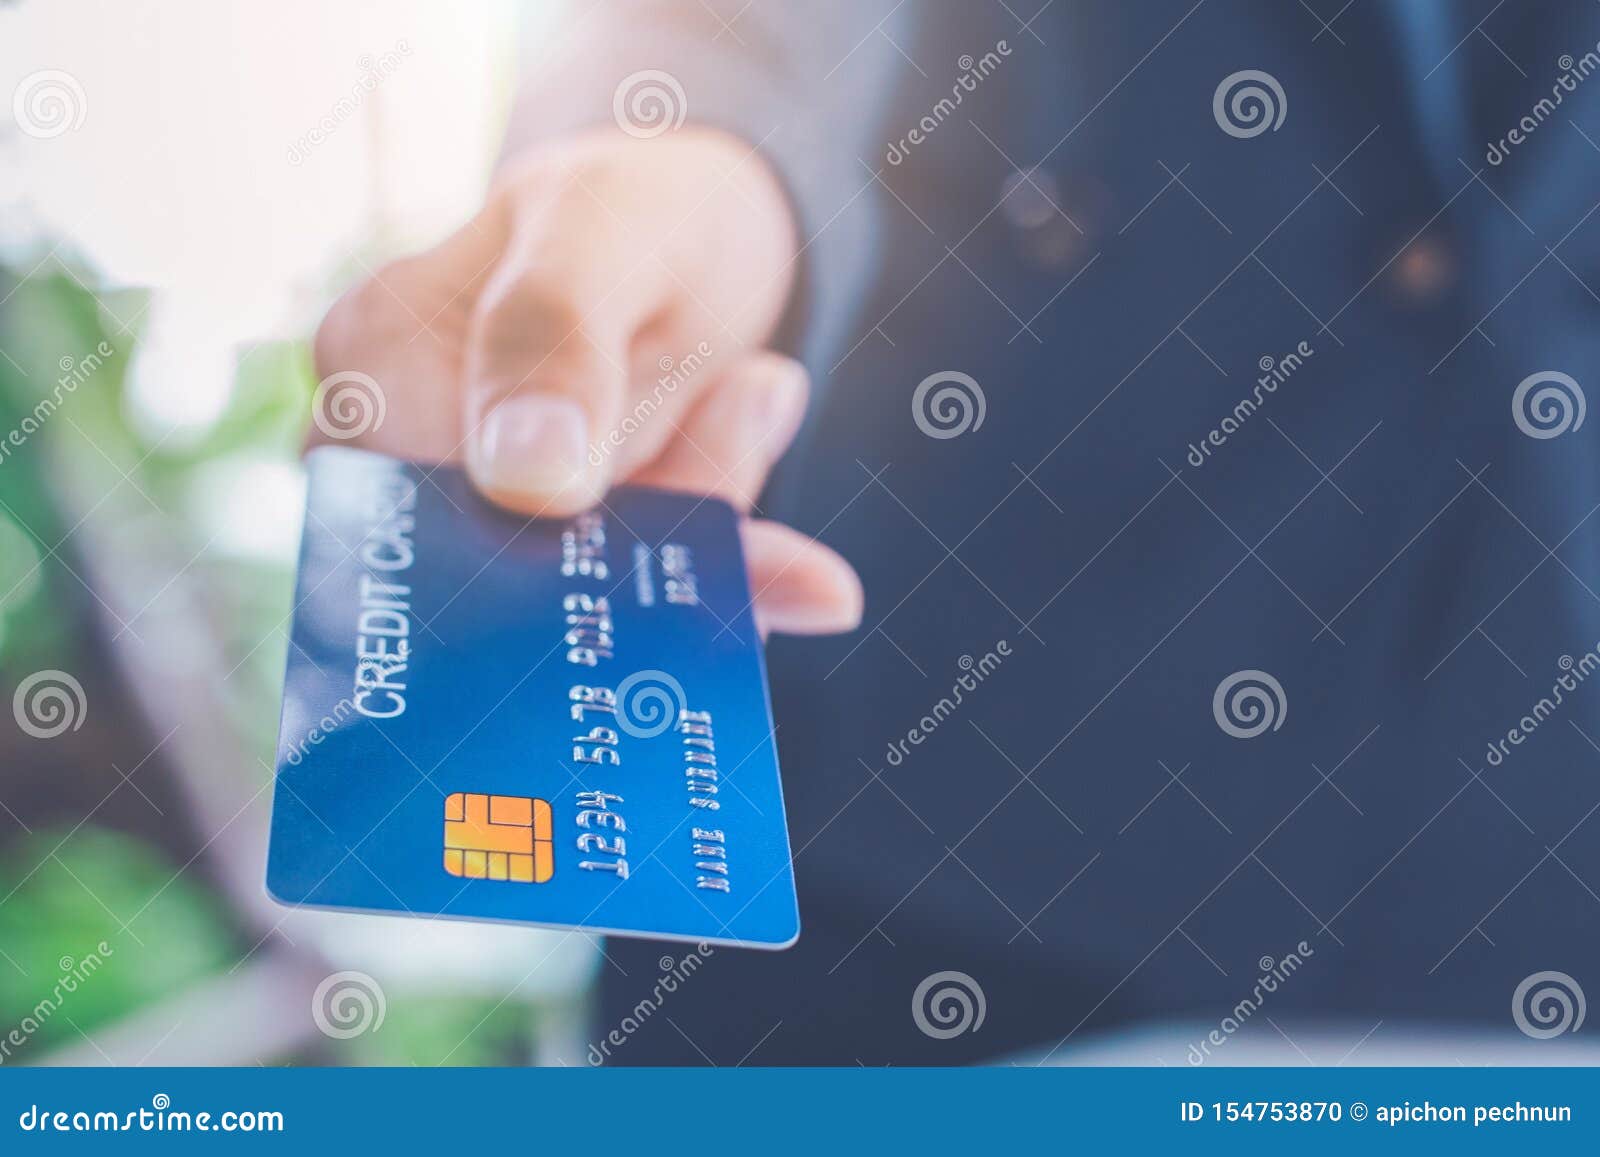 businessmen send blue credit cards for payment of goods